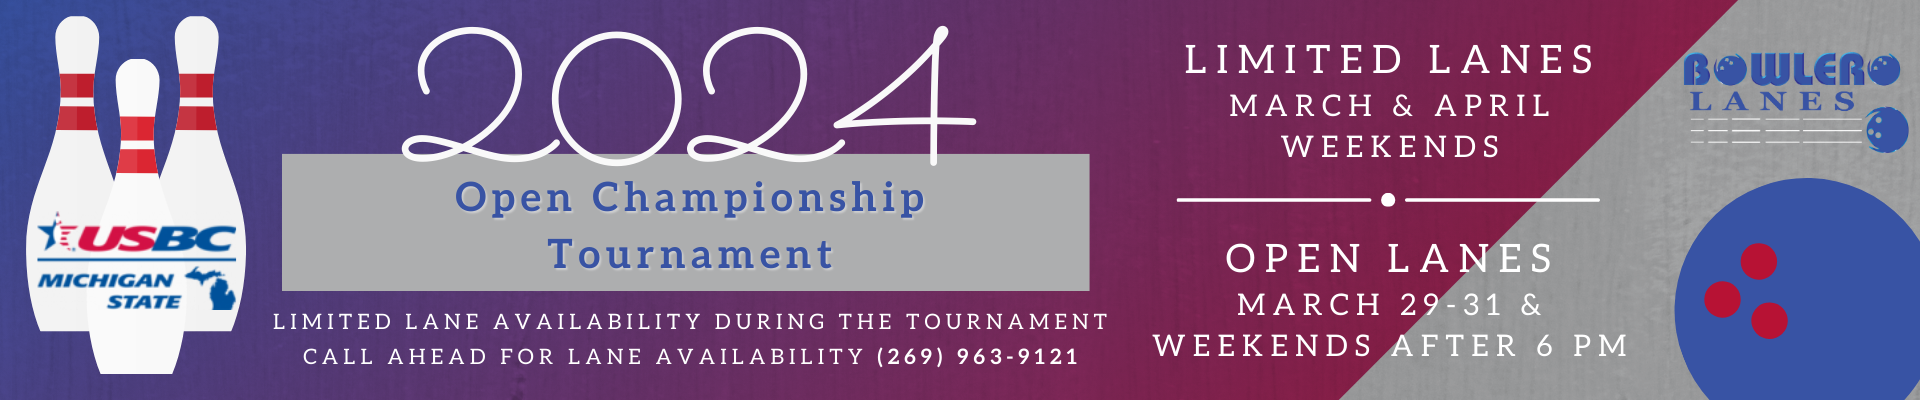 Bowlero - Tournament Flyer - Website